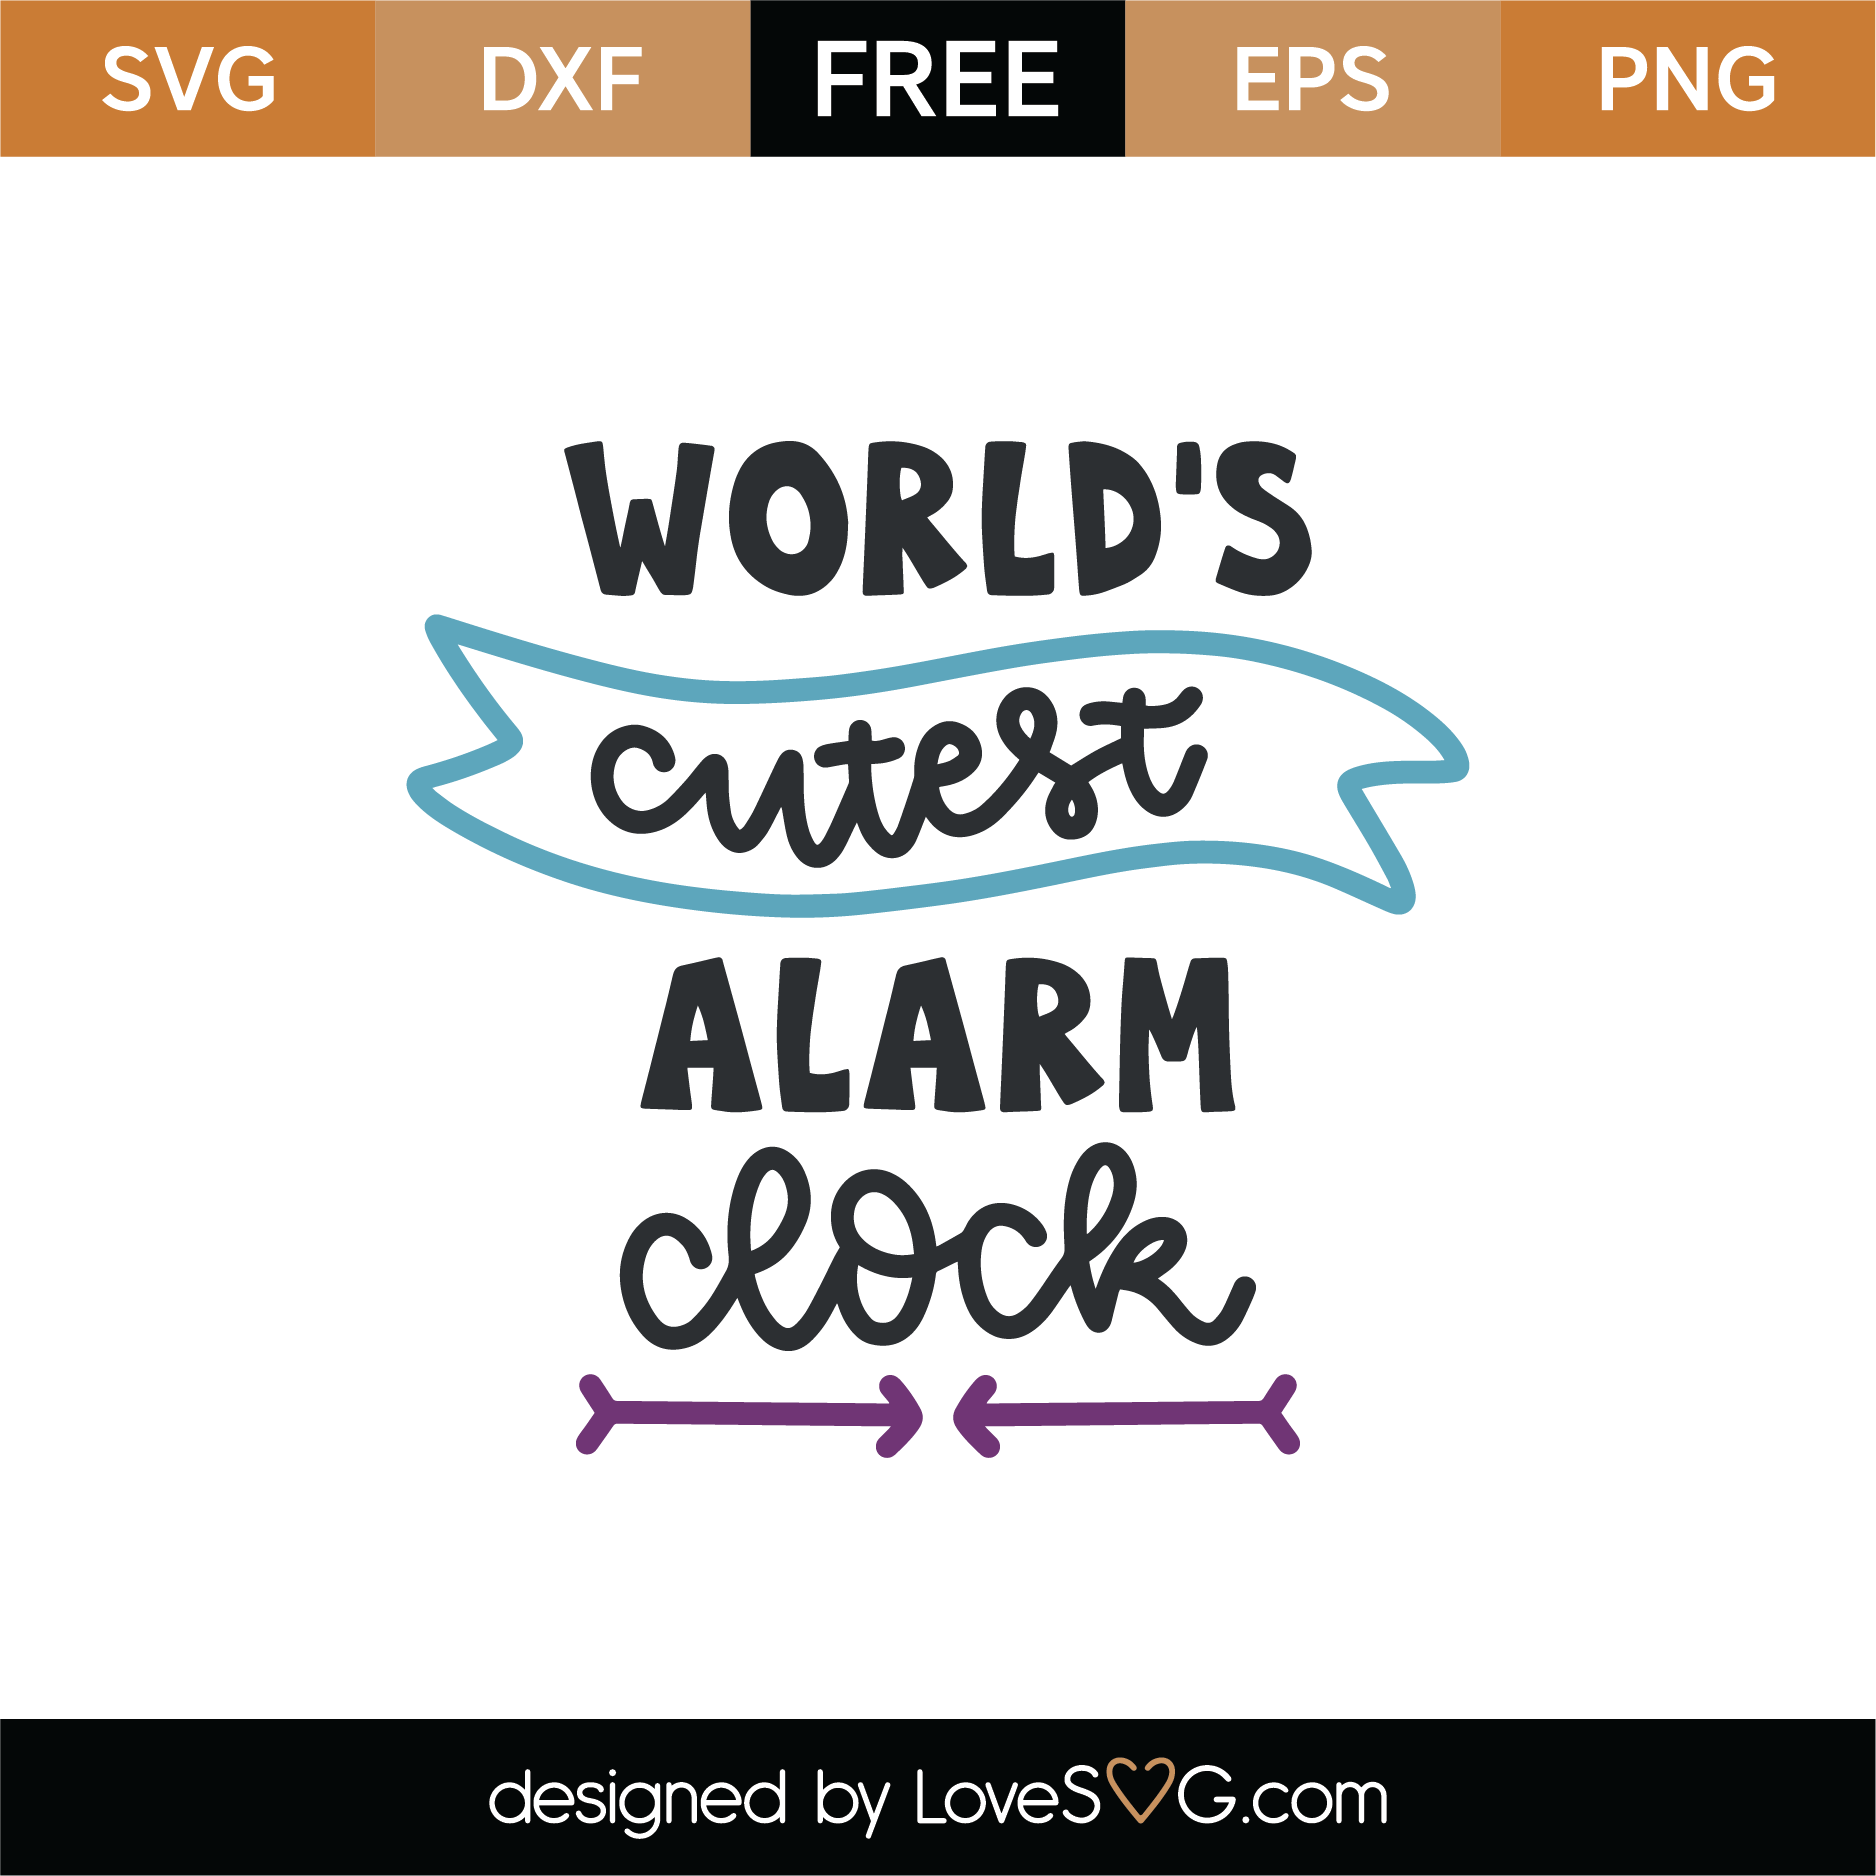 Free World's Cutest Alarm Clock SVG Cut File | Lovesvg.com